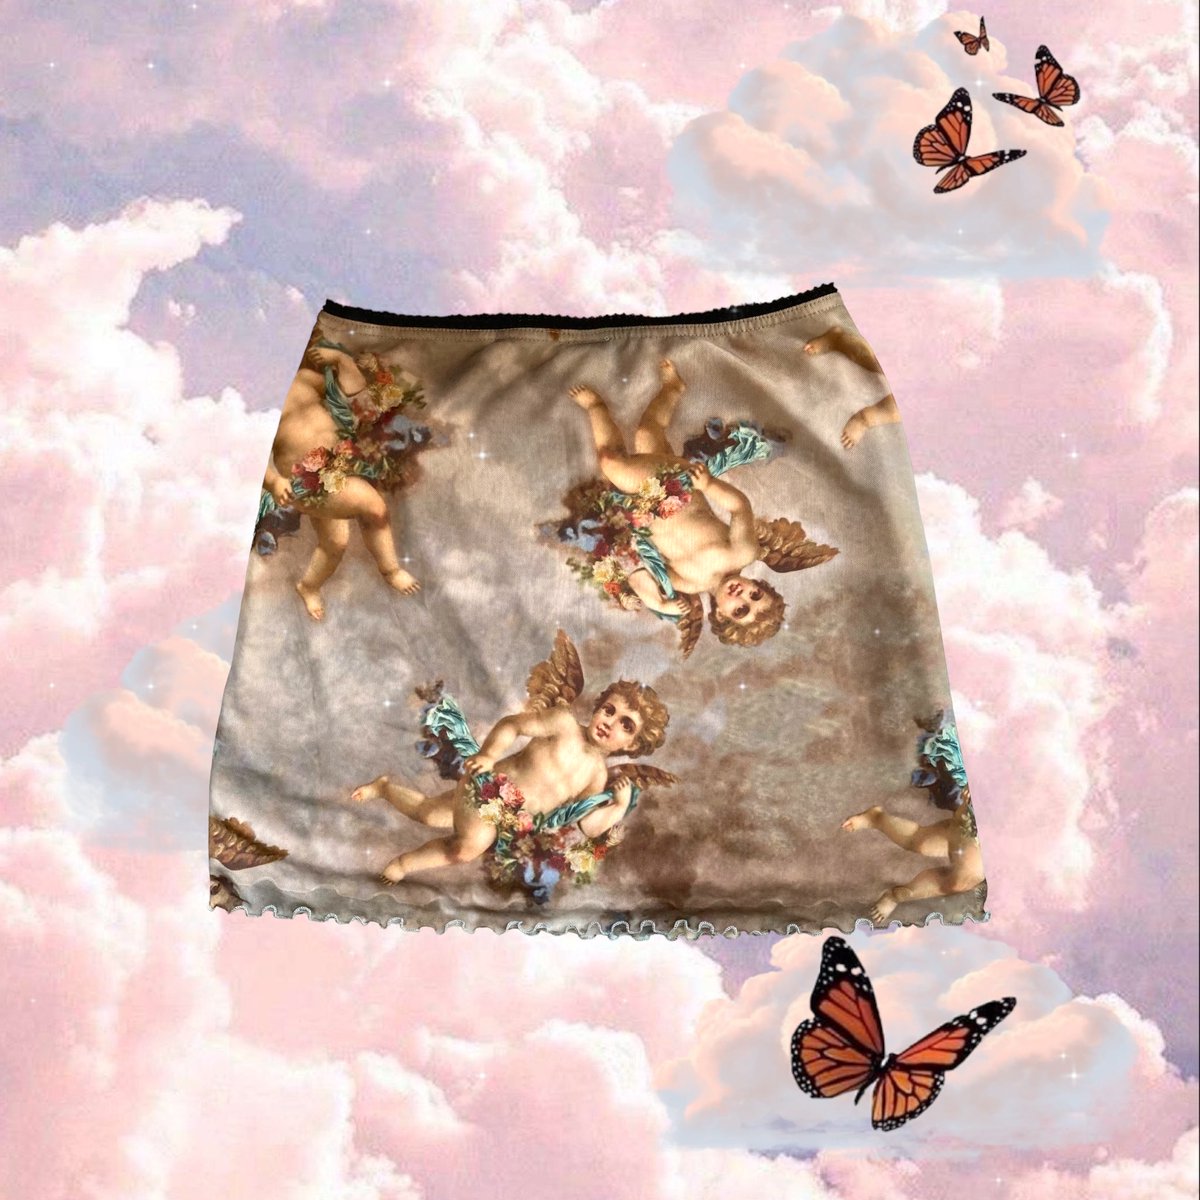 Cherub Print Skirt #gothfashion #goth #whimsical #whimsigoth #funki #renaissanceart #baroquepainting #cherabgoth #daVinci #MonaLisa #cherubrose #etheral